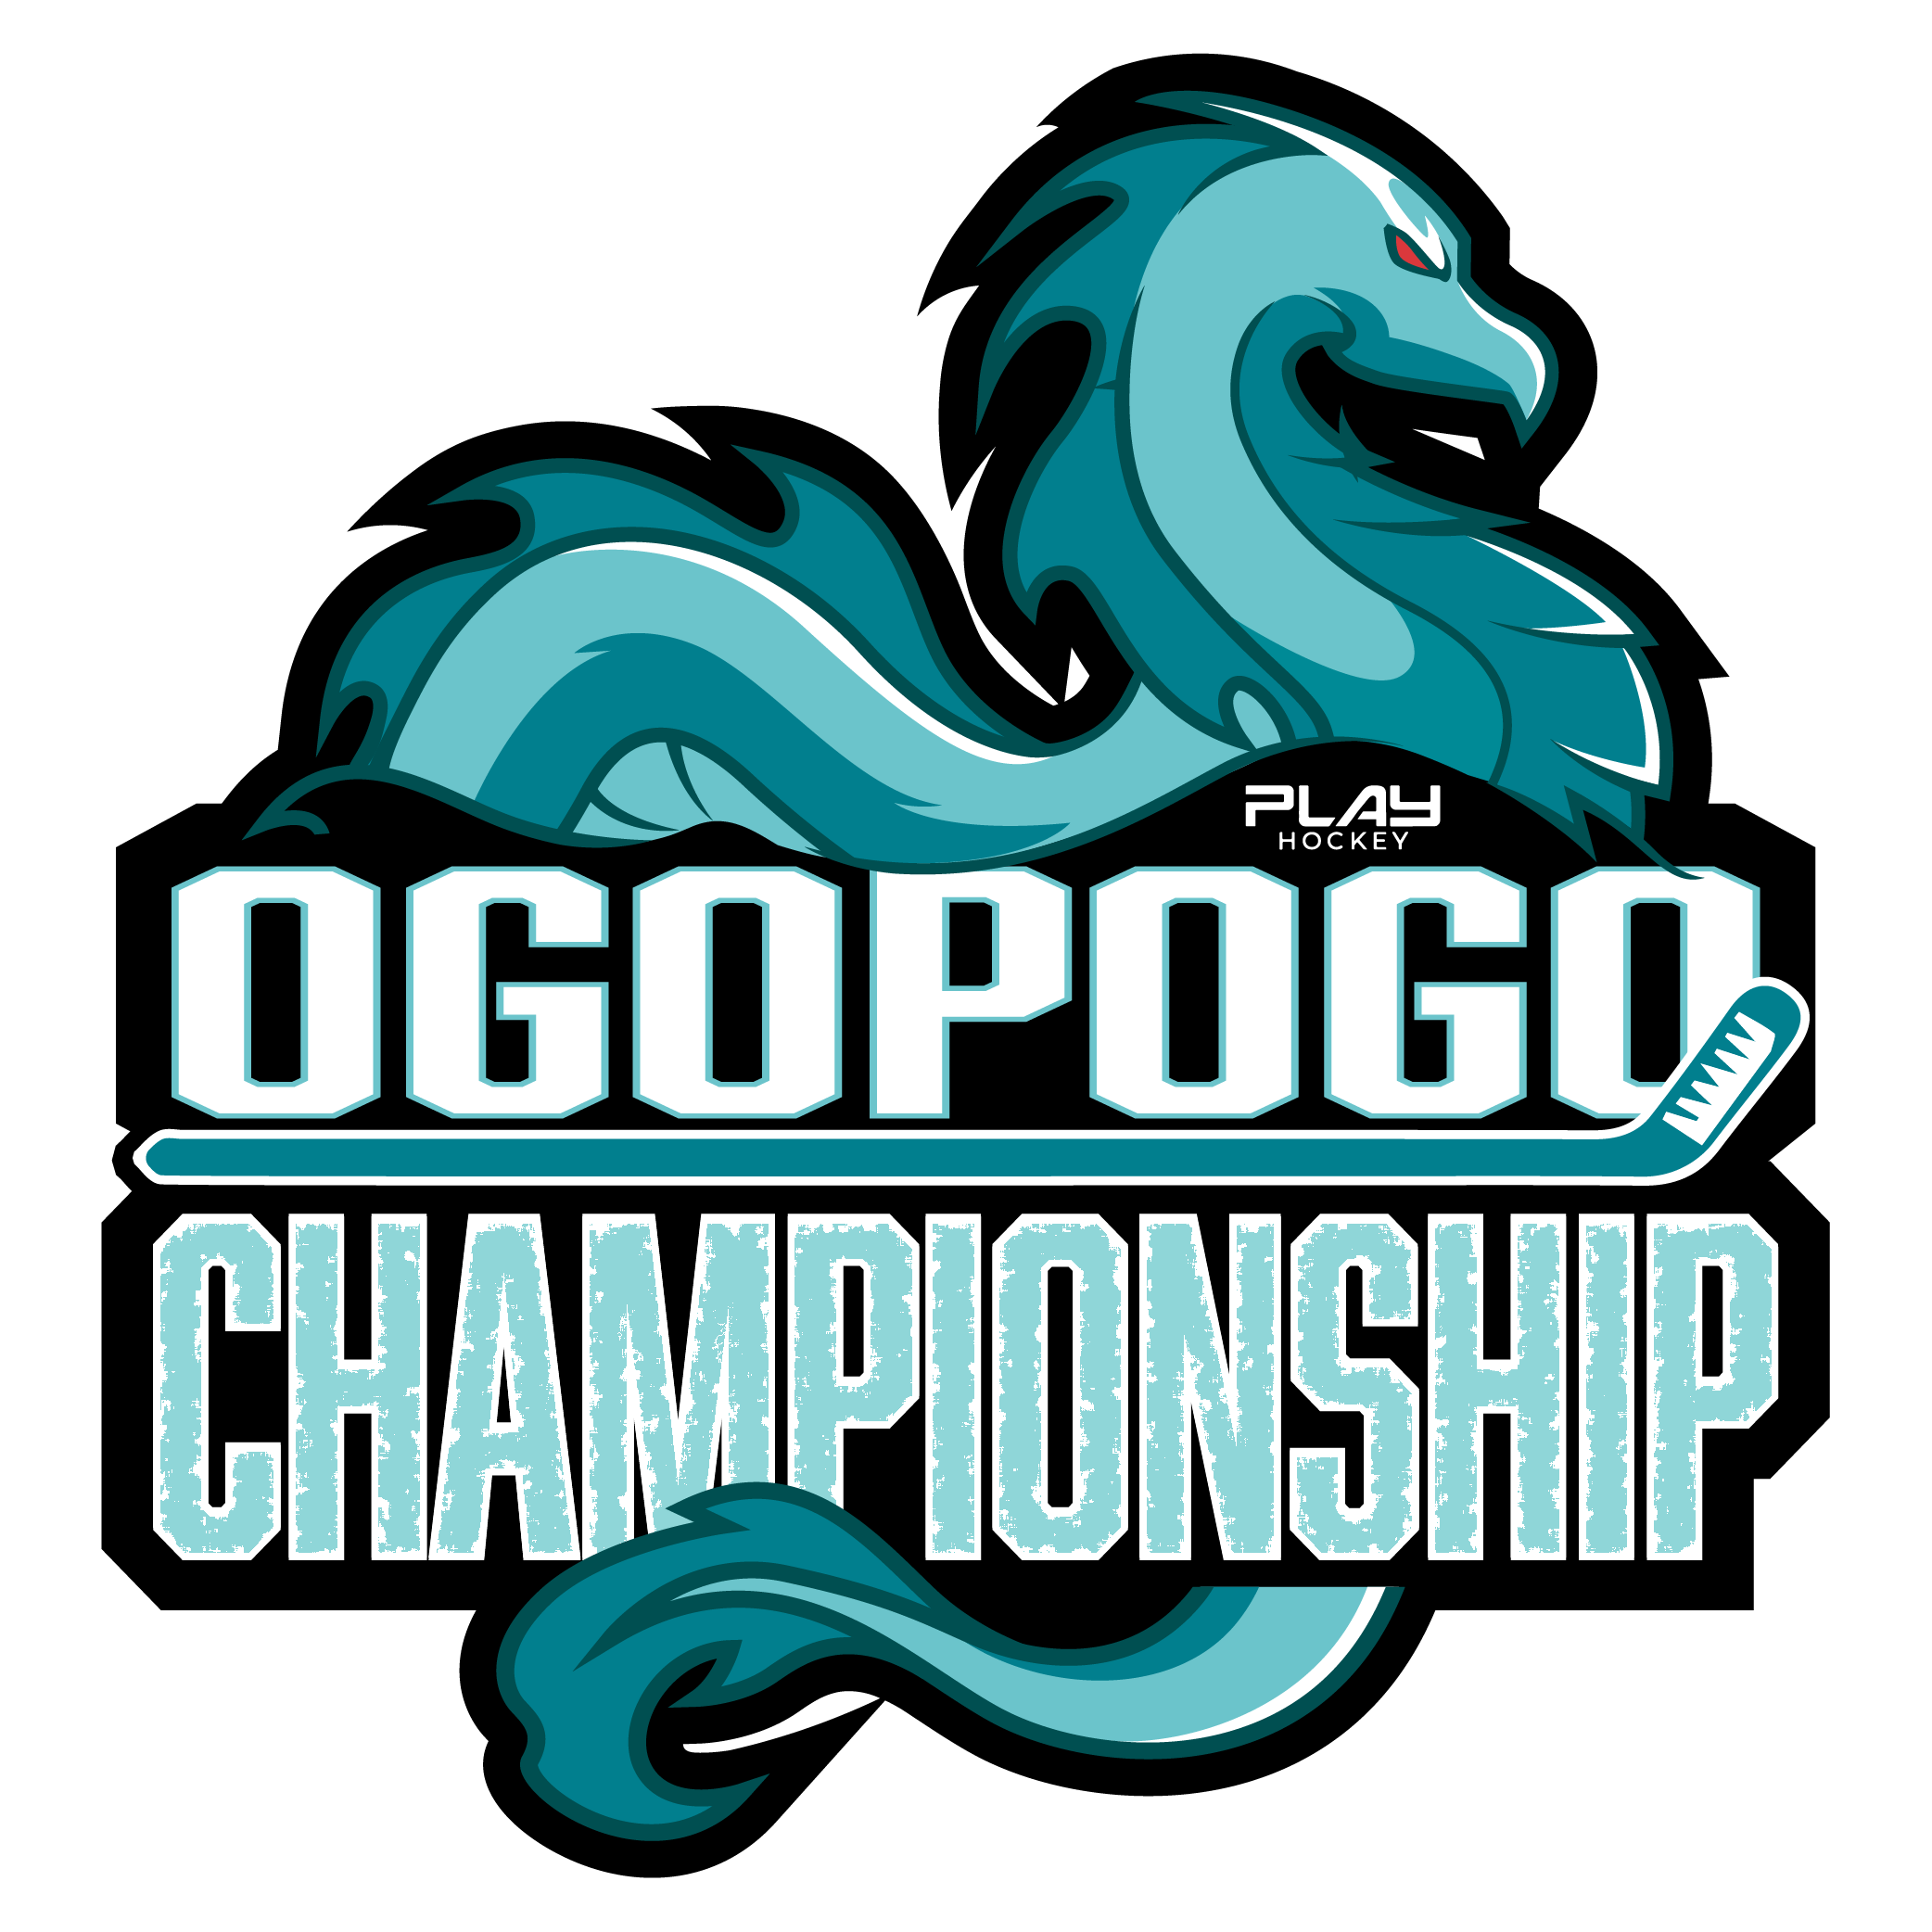 https://20502767.fs1.hubspotusercontent-na1.net/hubfs/20502767/PH-Ogopogo-Championship-01.png